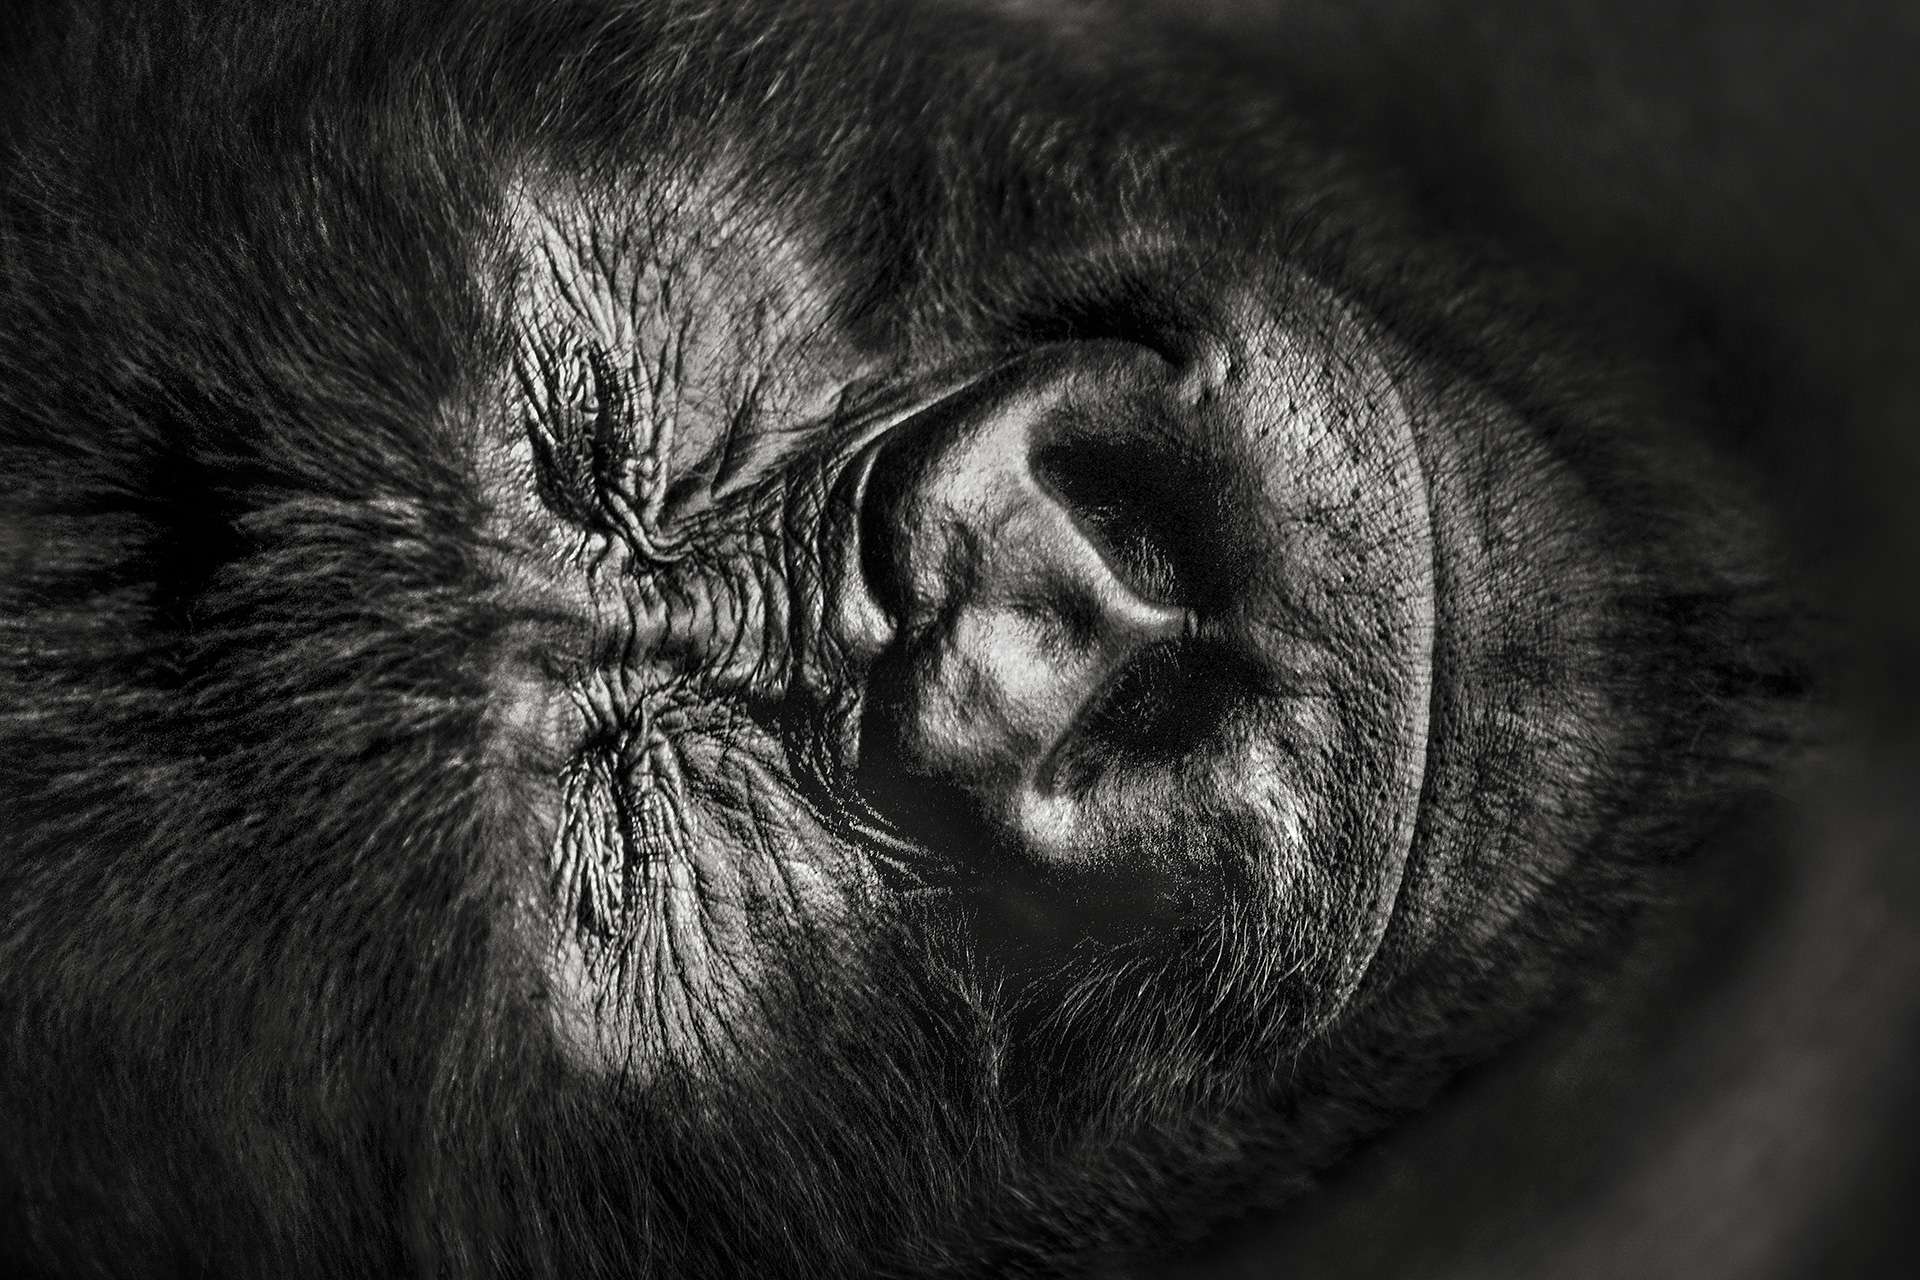 Gilles Martin's photograph of a gorilla from Rwanda